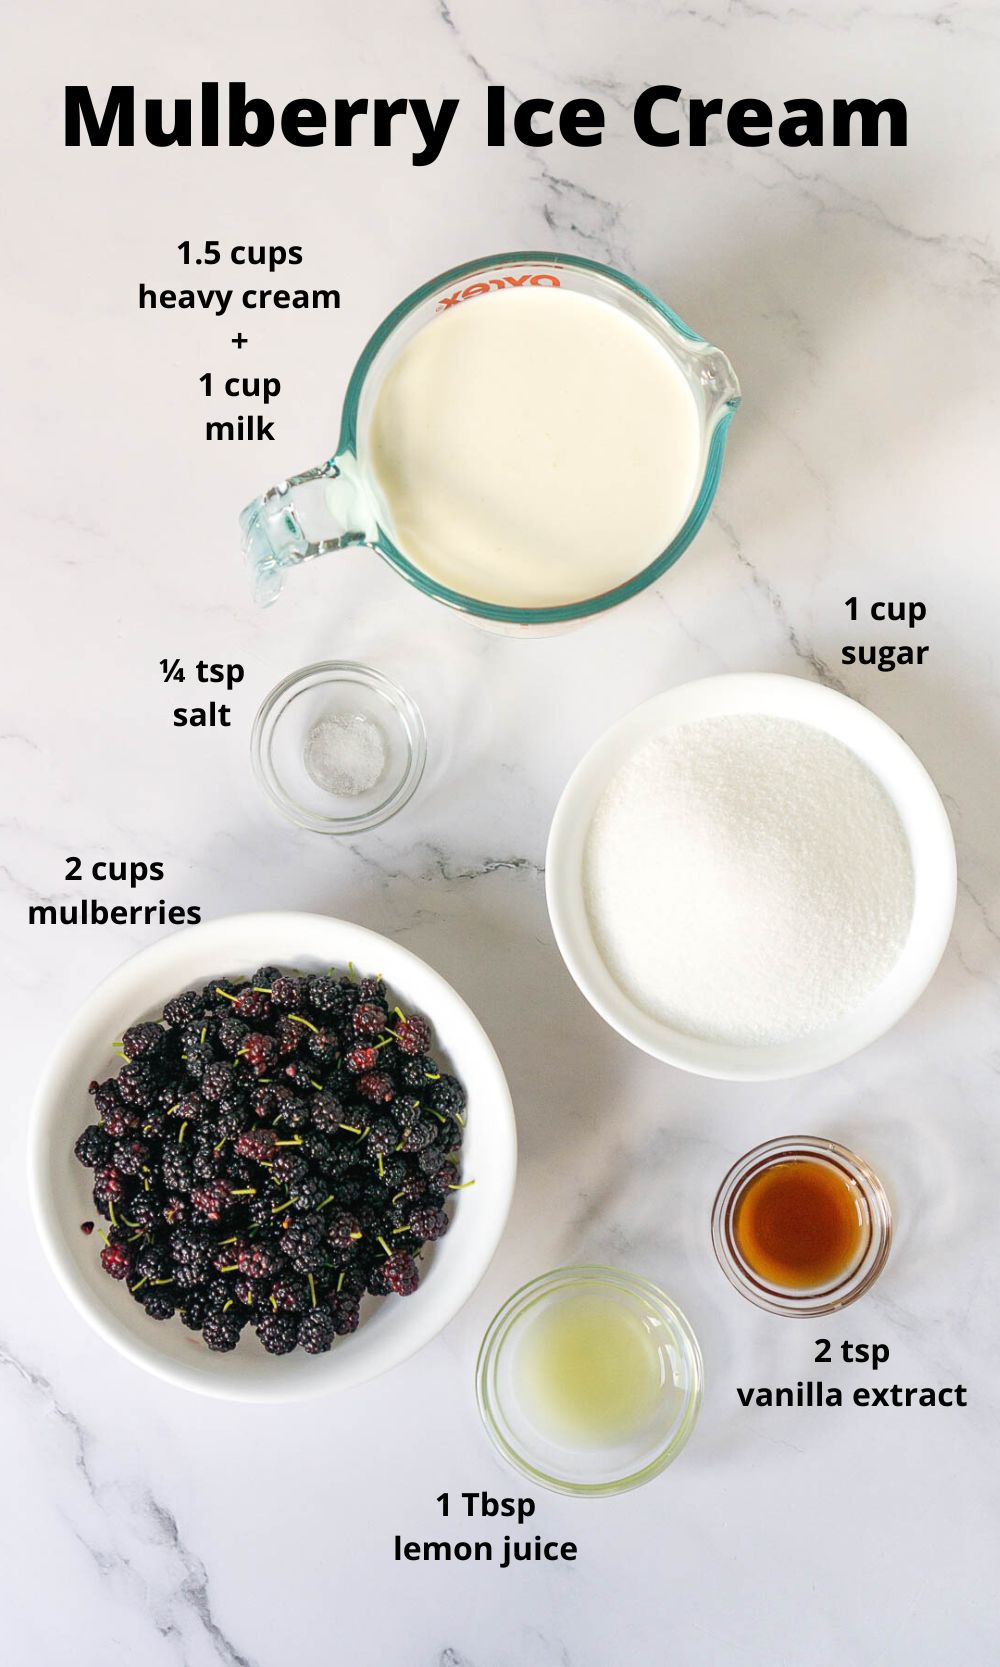 Mulberry ice cream ingredients